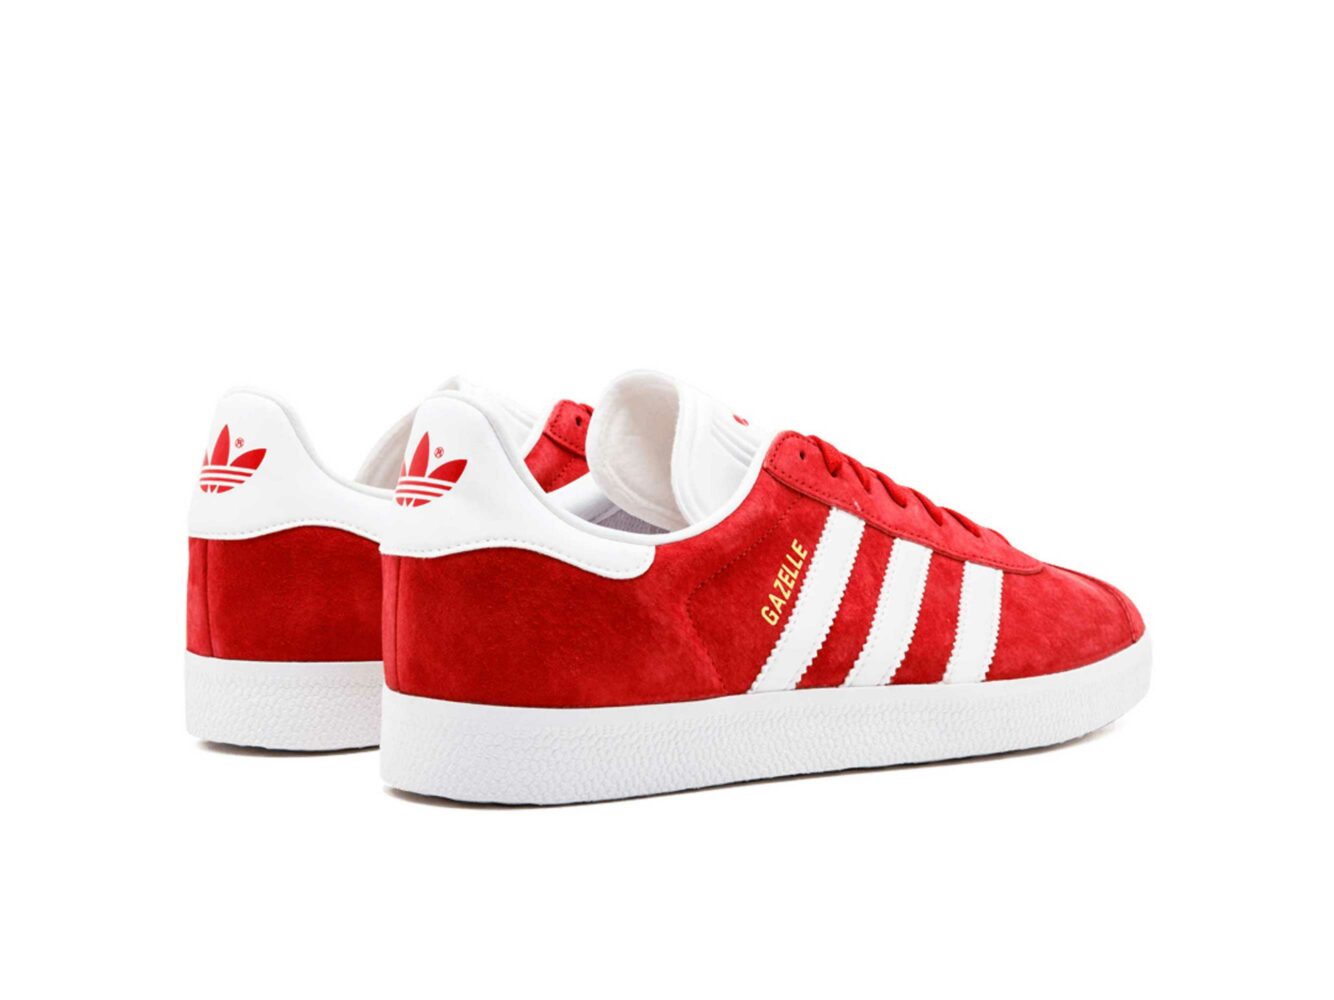 adidas gazelle red white s76228 купить